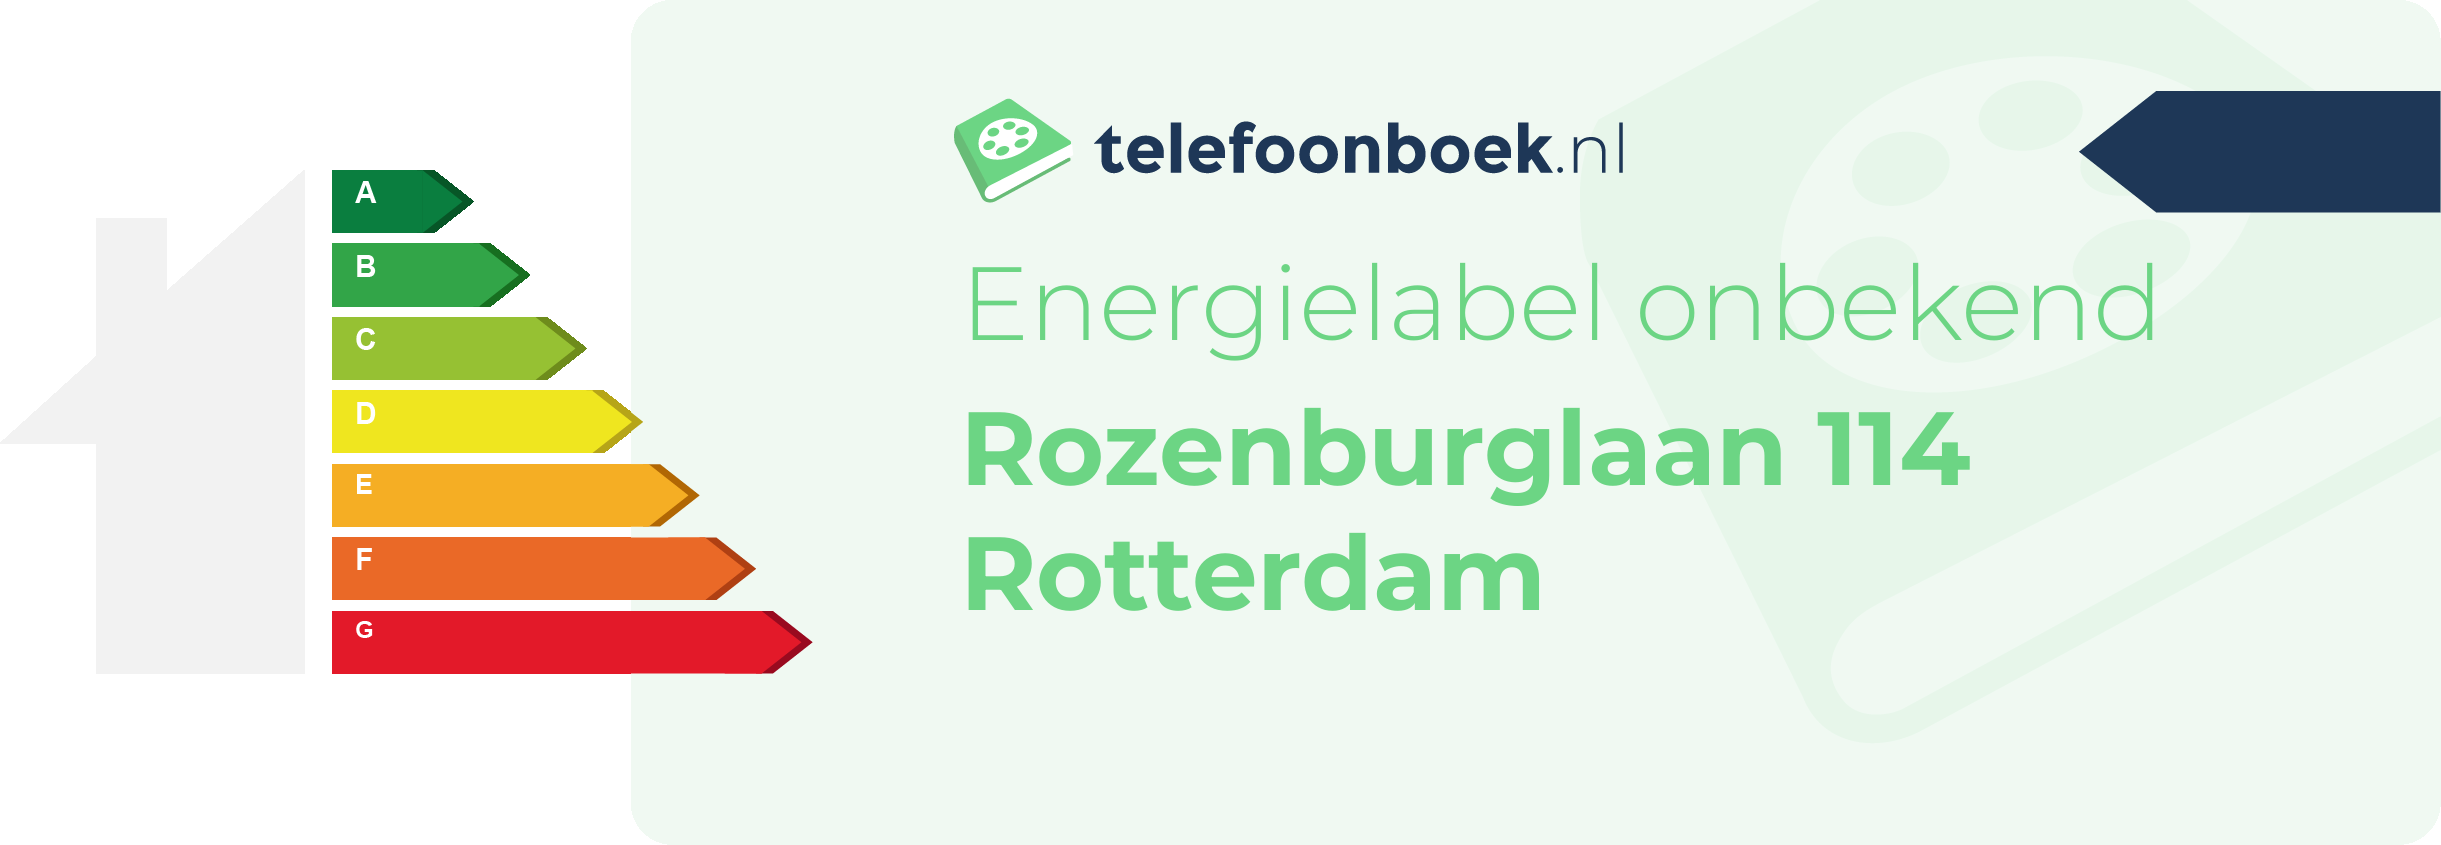 Energielabel Rozenburglaan 114 Rotterdam